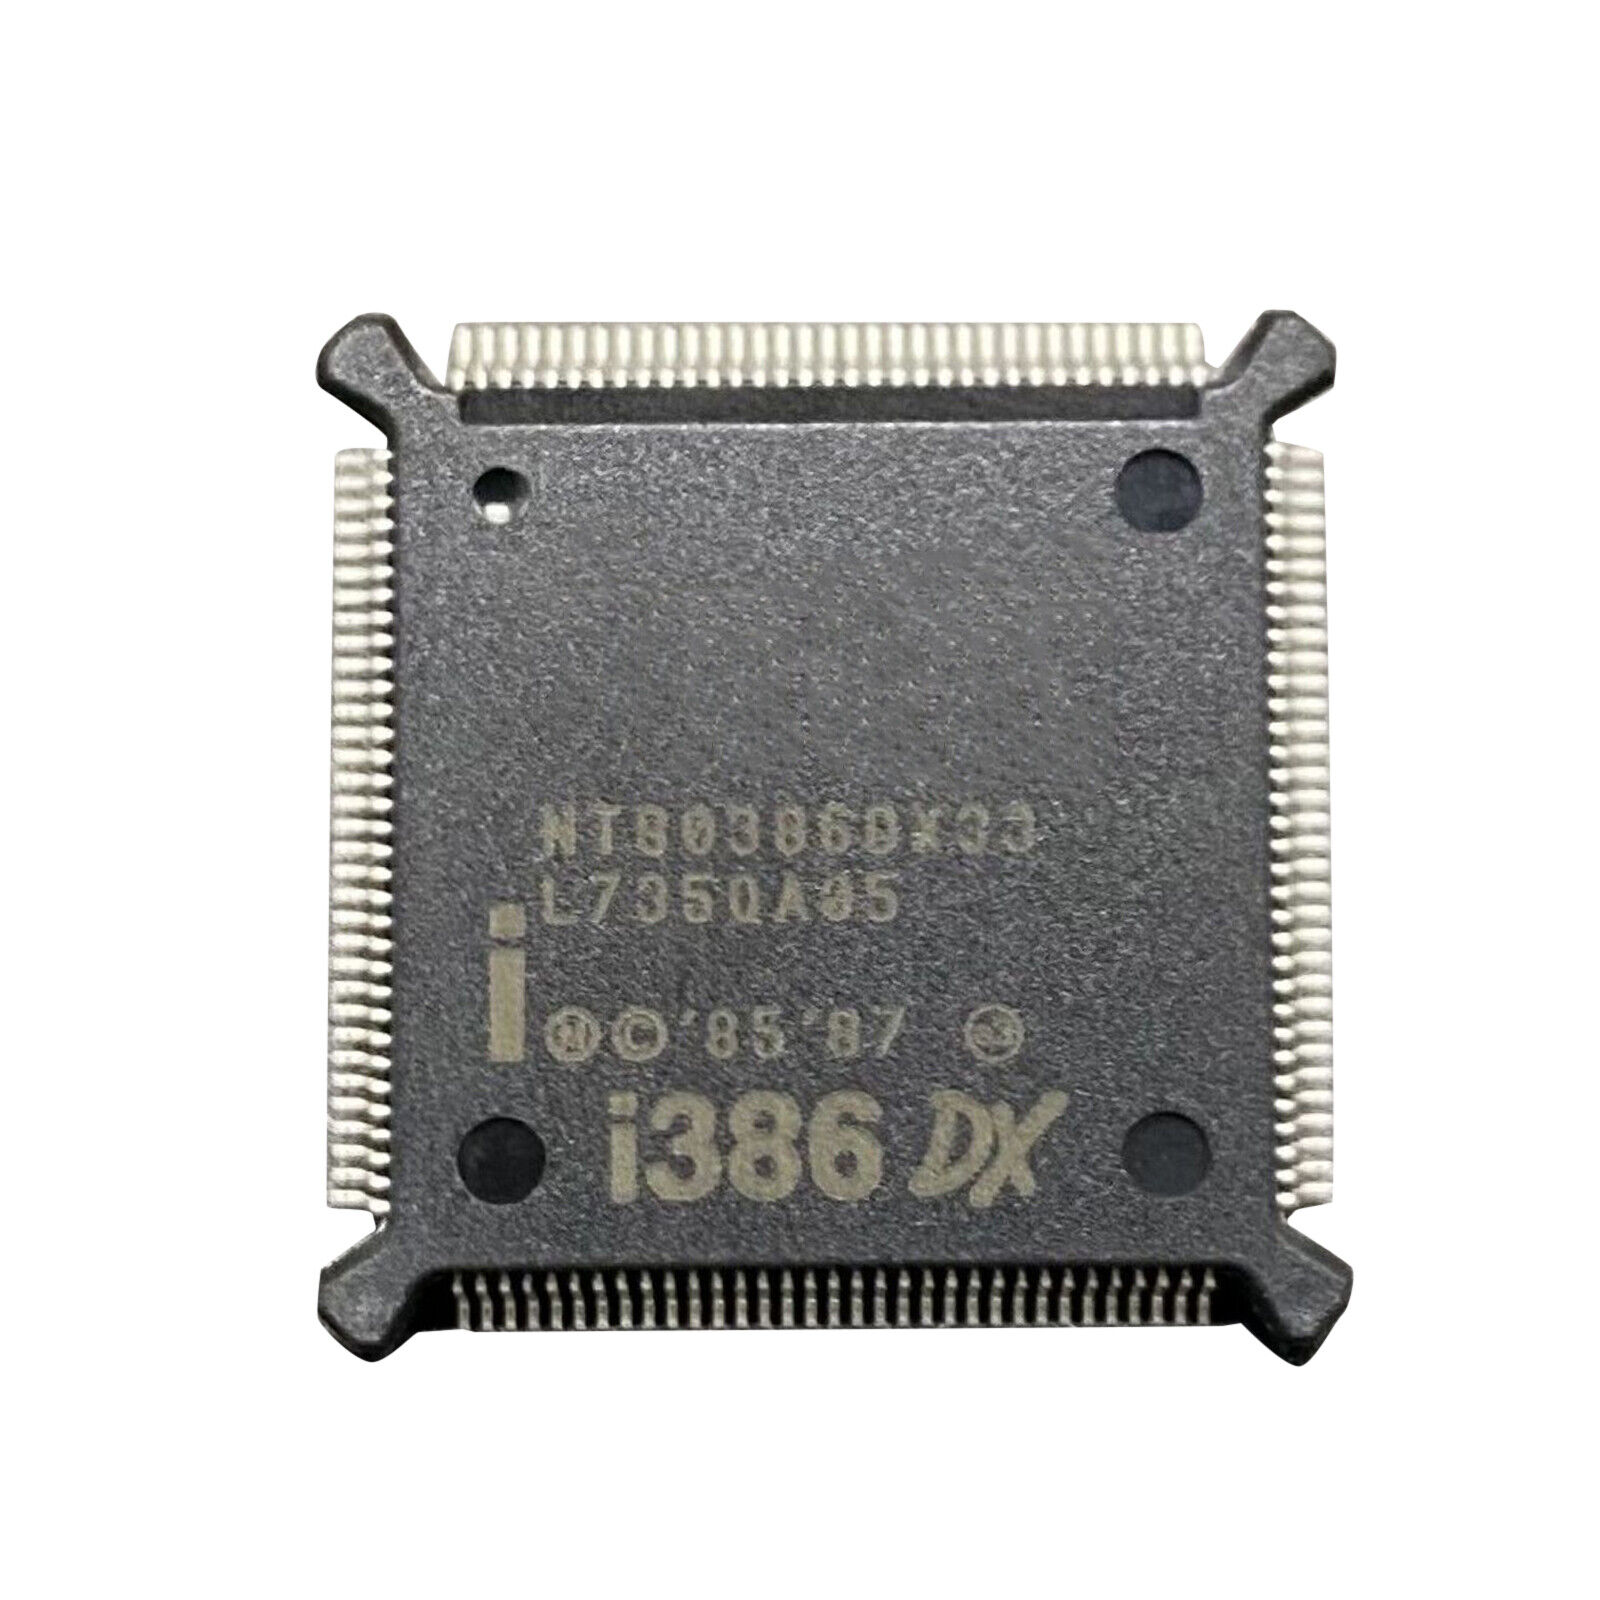 New Intel NT80386DX33 CPU i386DX Processor QFP132 33MHz NOS 80386